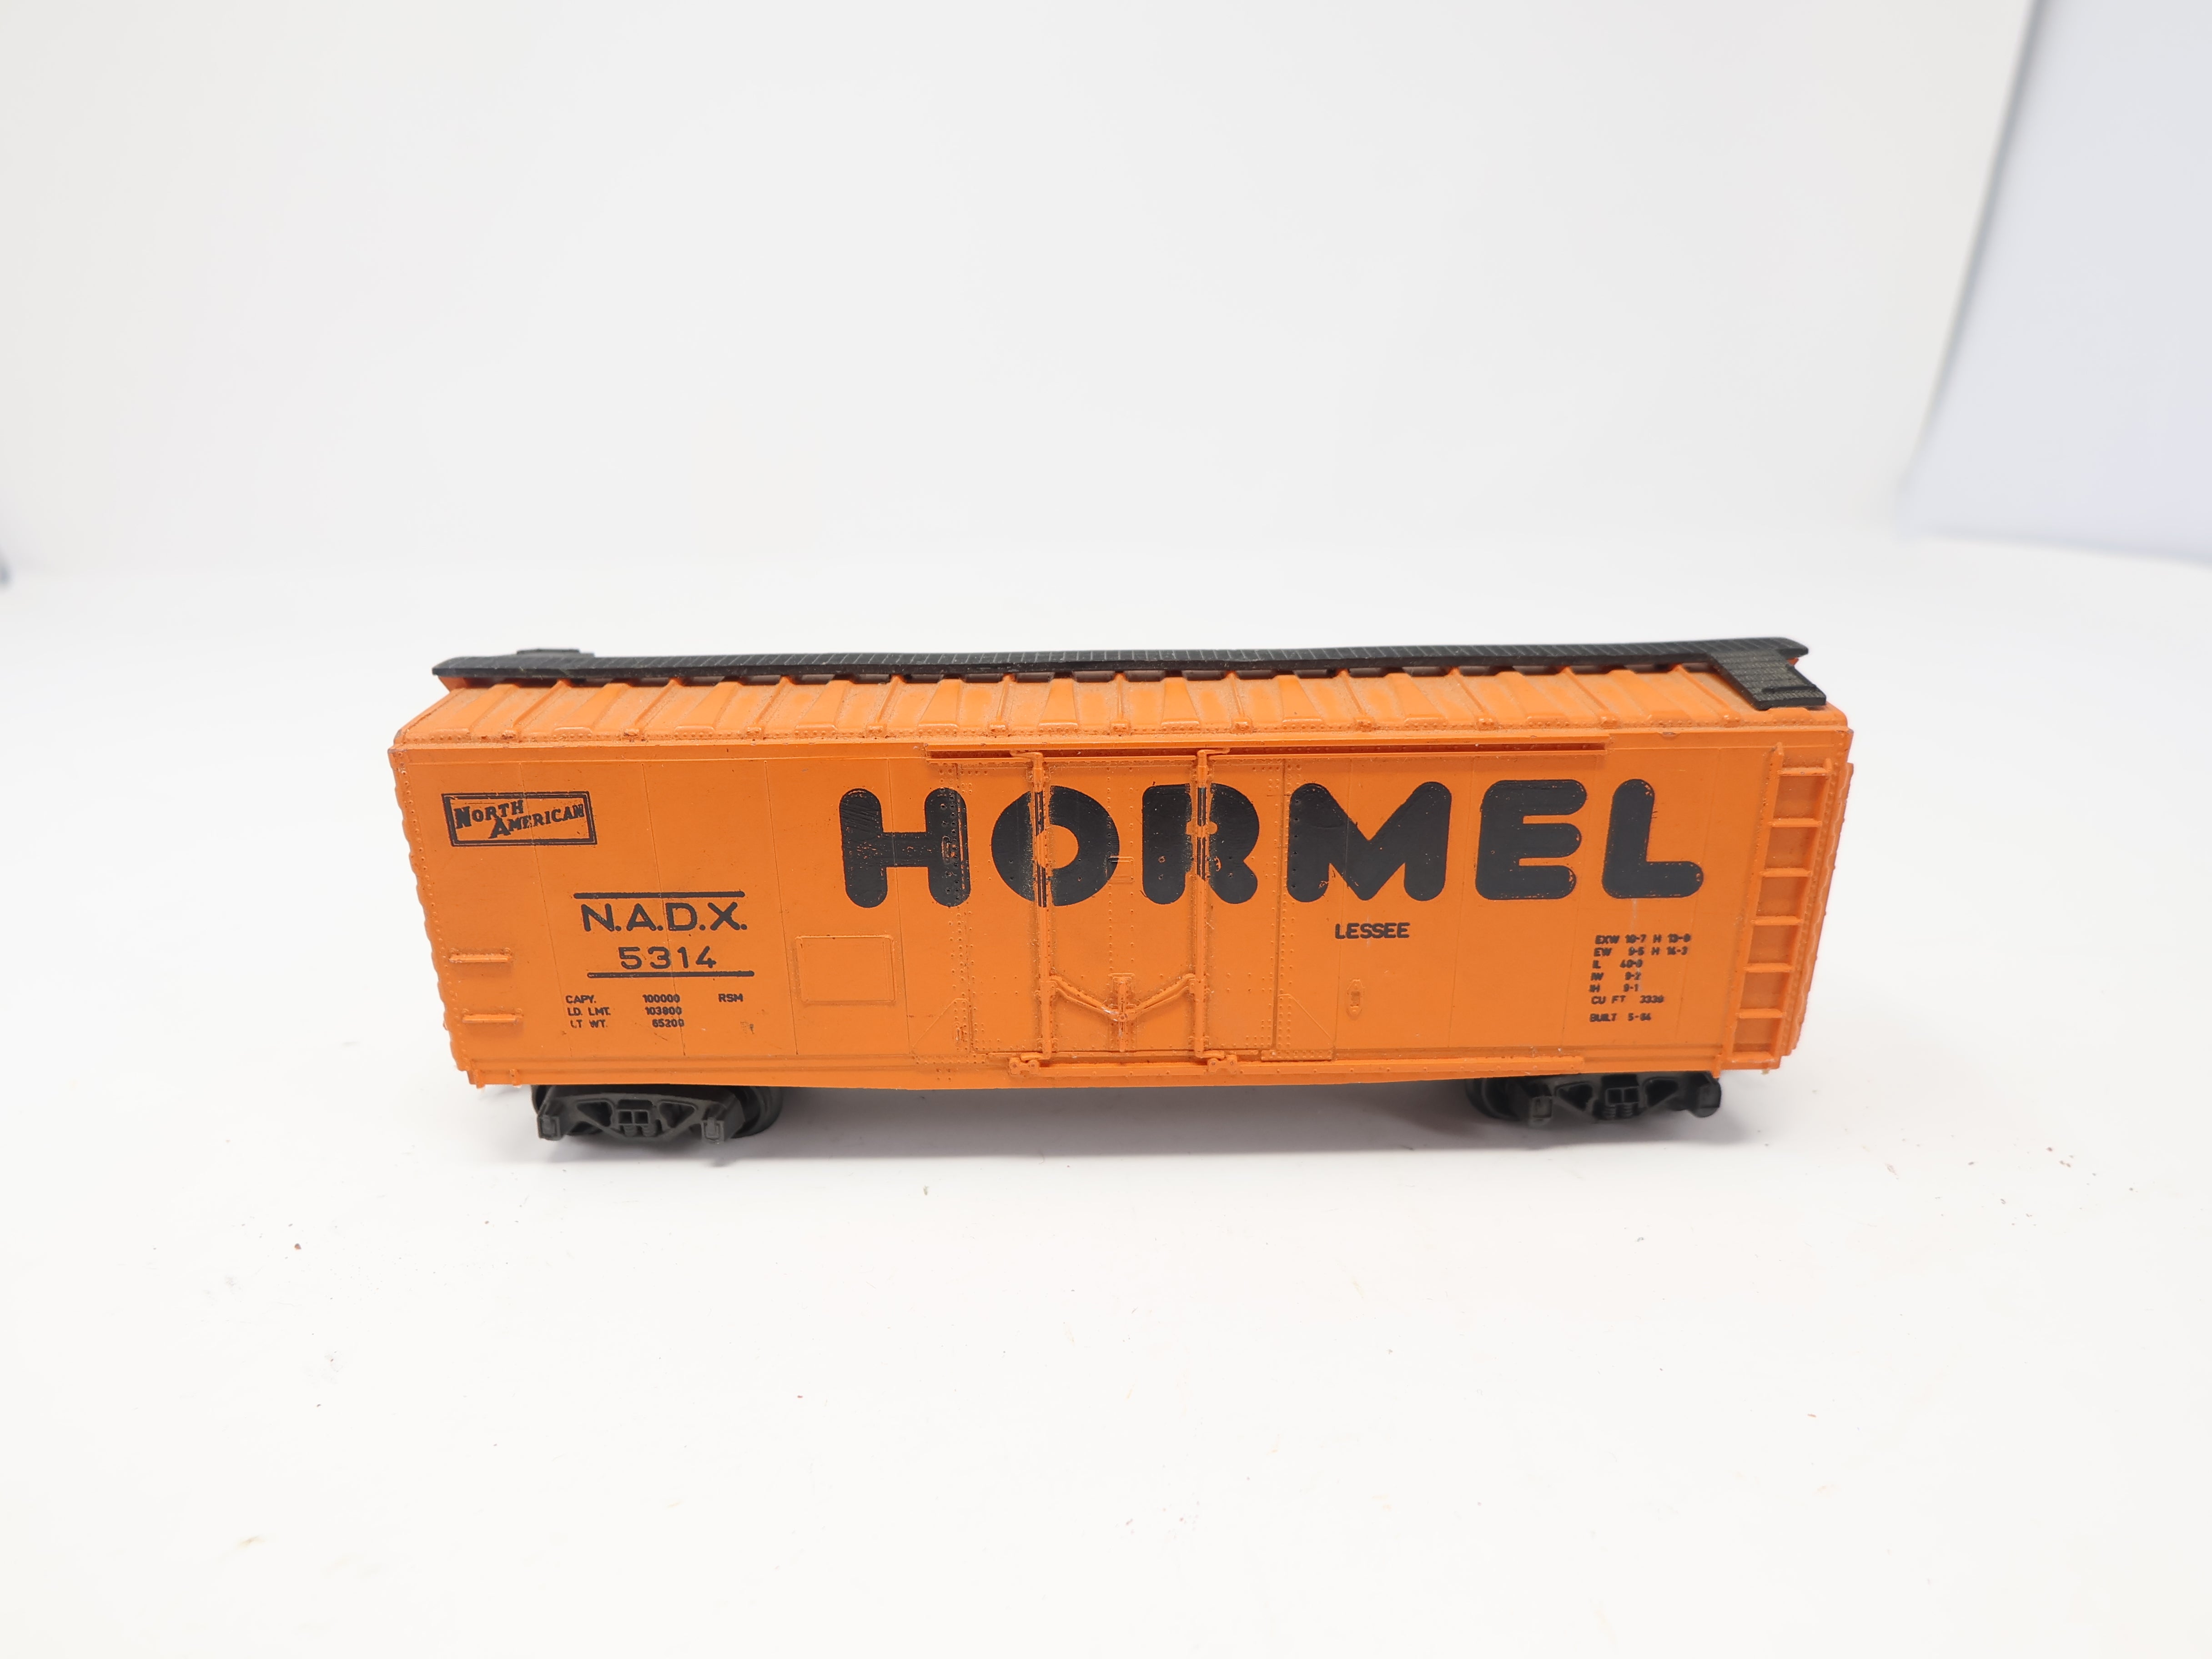 USED AHM HO Scale, 40' Steel Box Car, Hormel NADX #5314, Rough